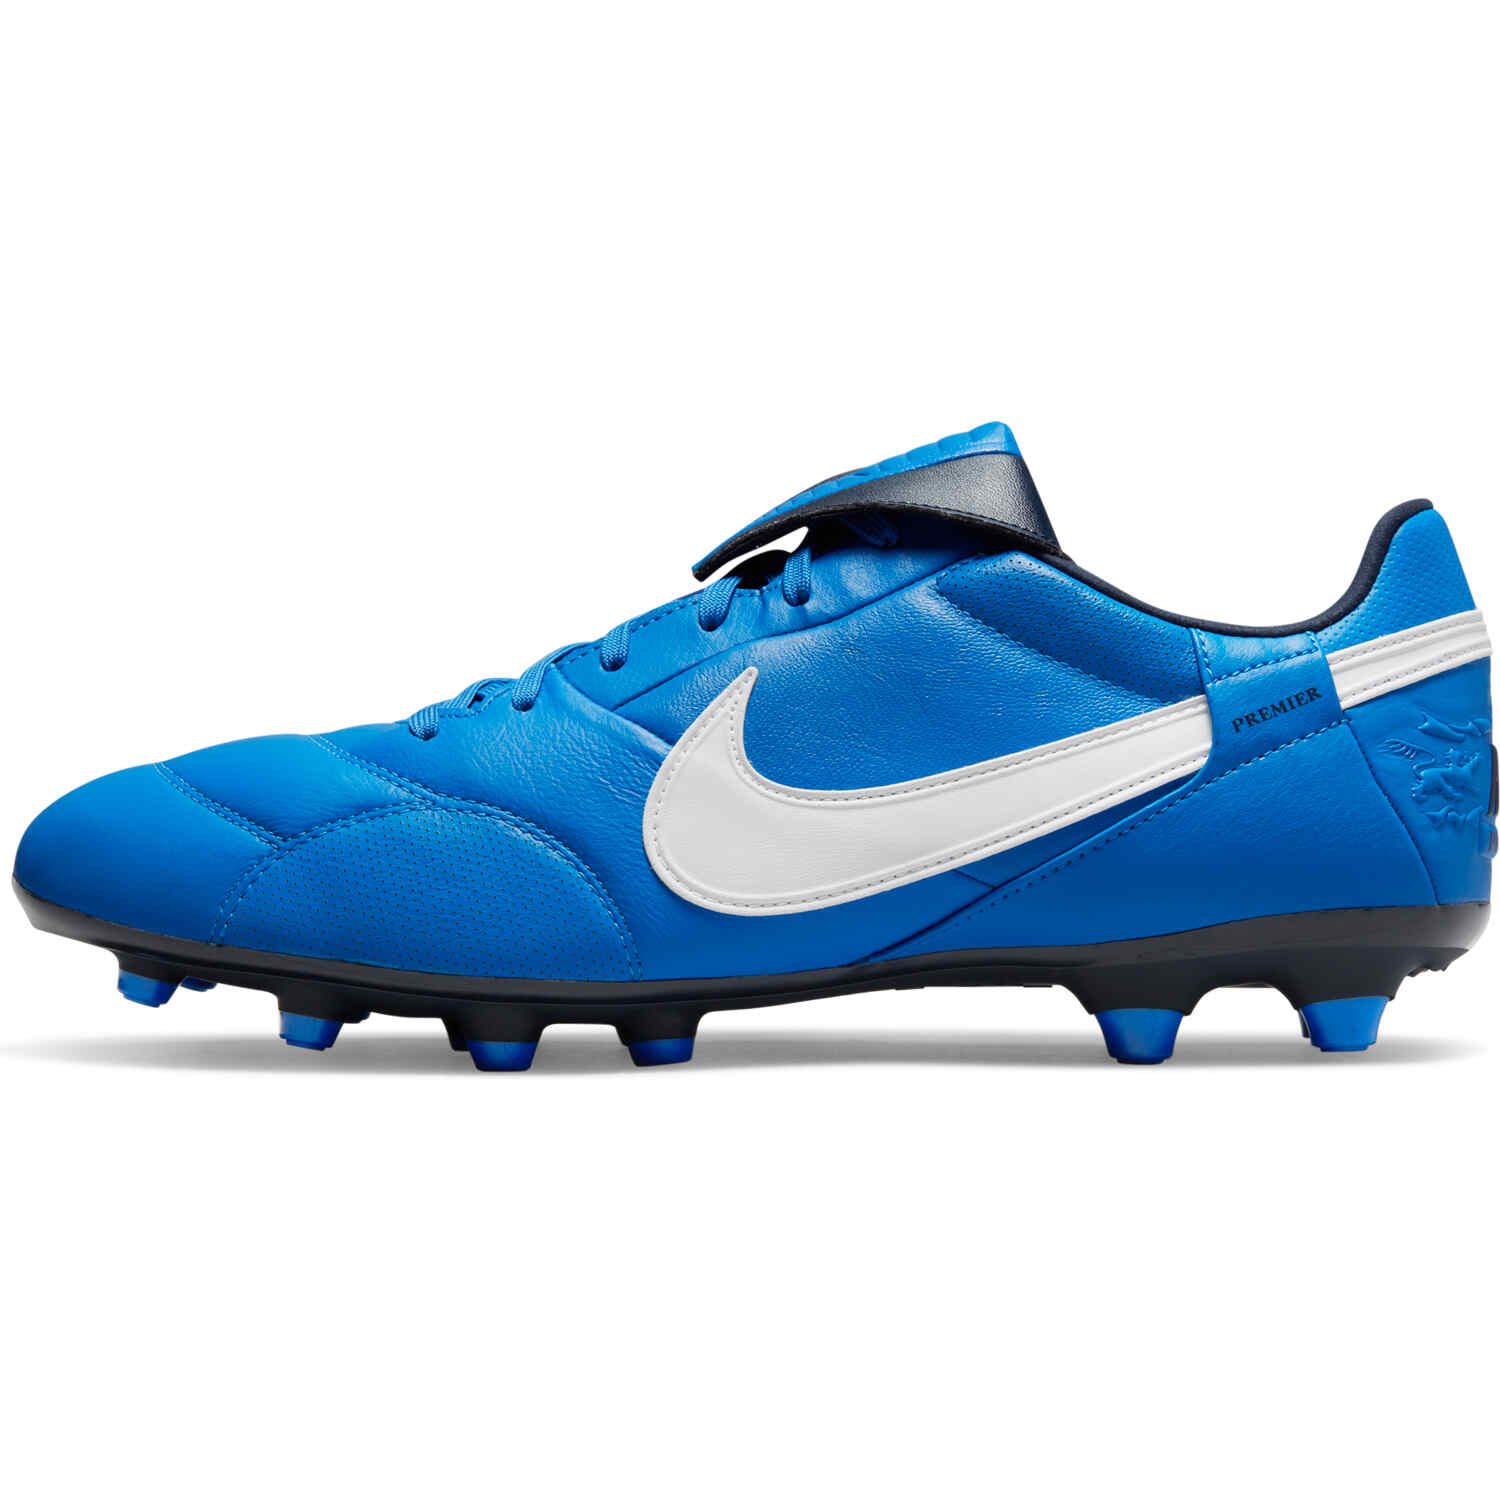 Nike Premier III FG - Signal Blue & White with Obsidian - SoccerPro